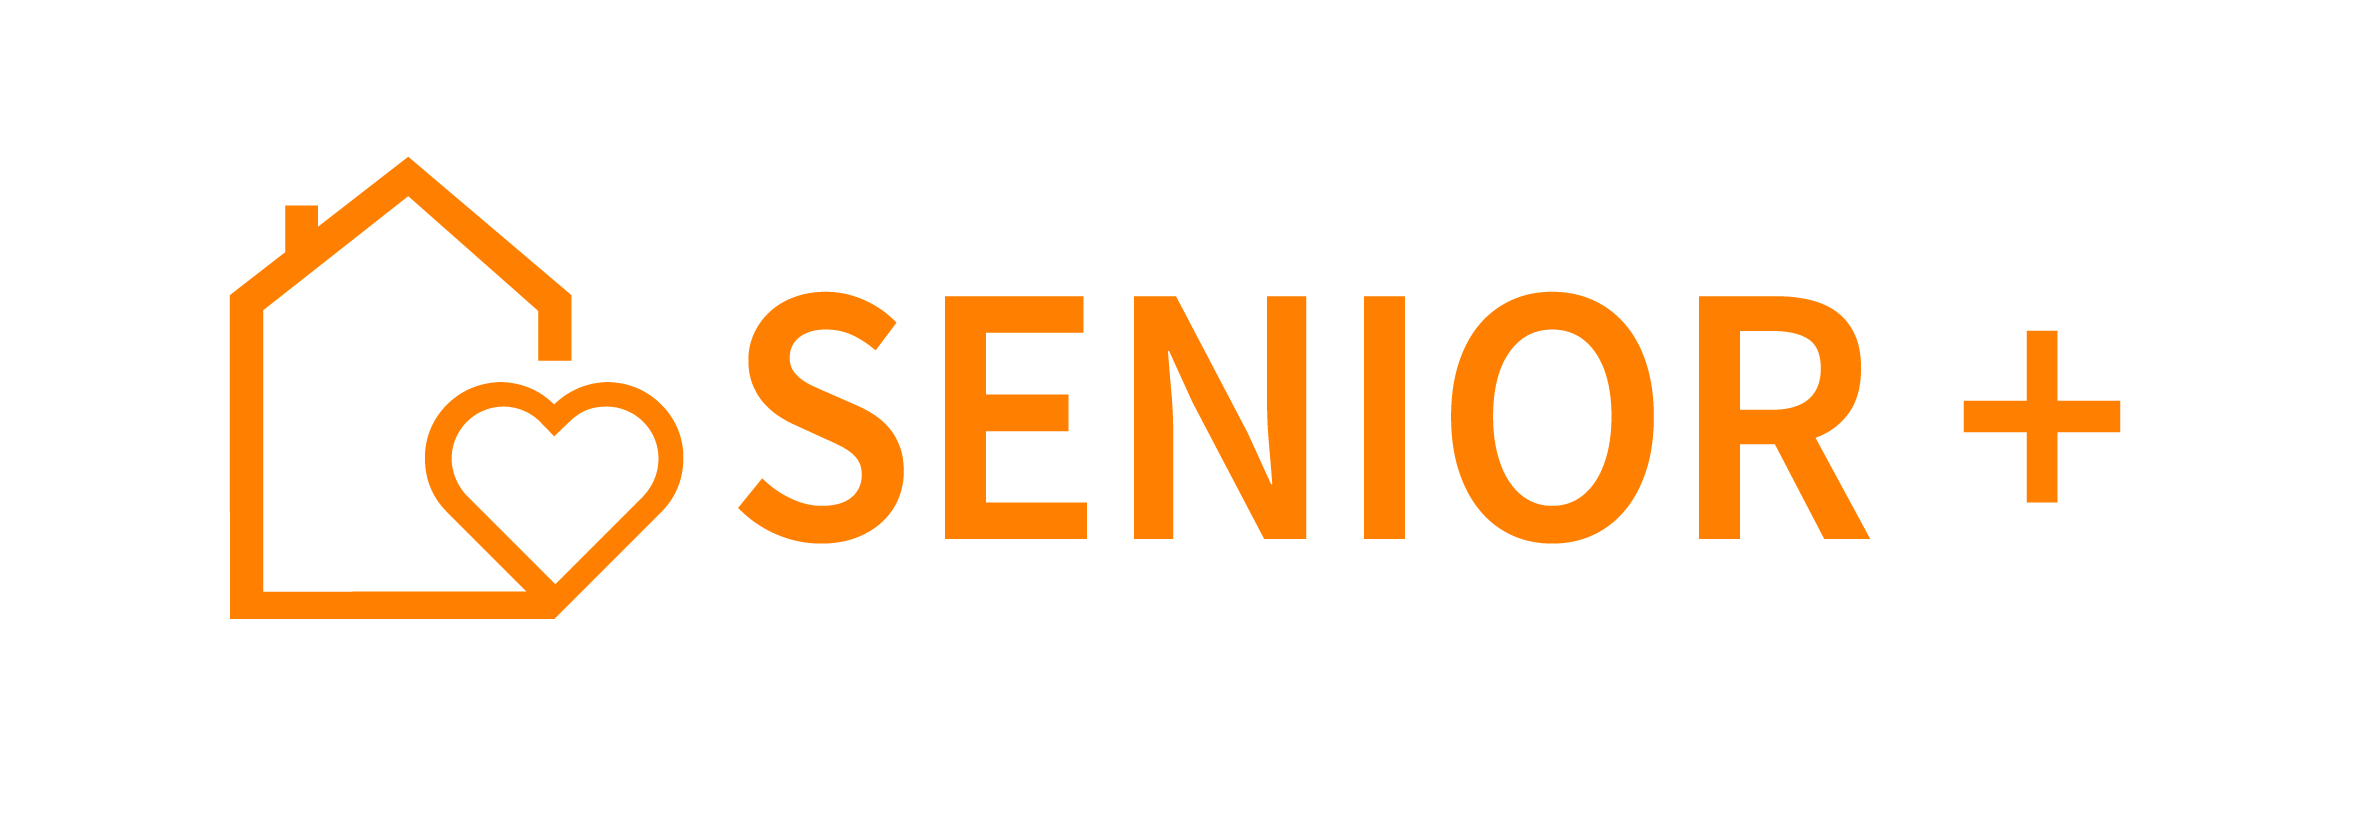 logo senior +